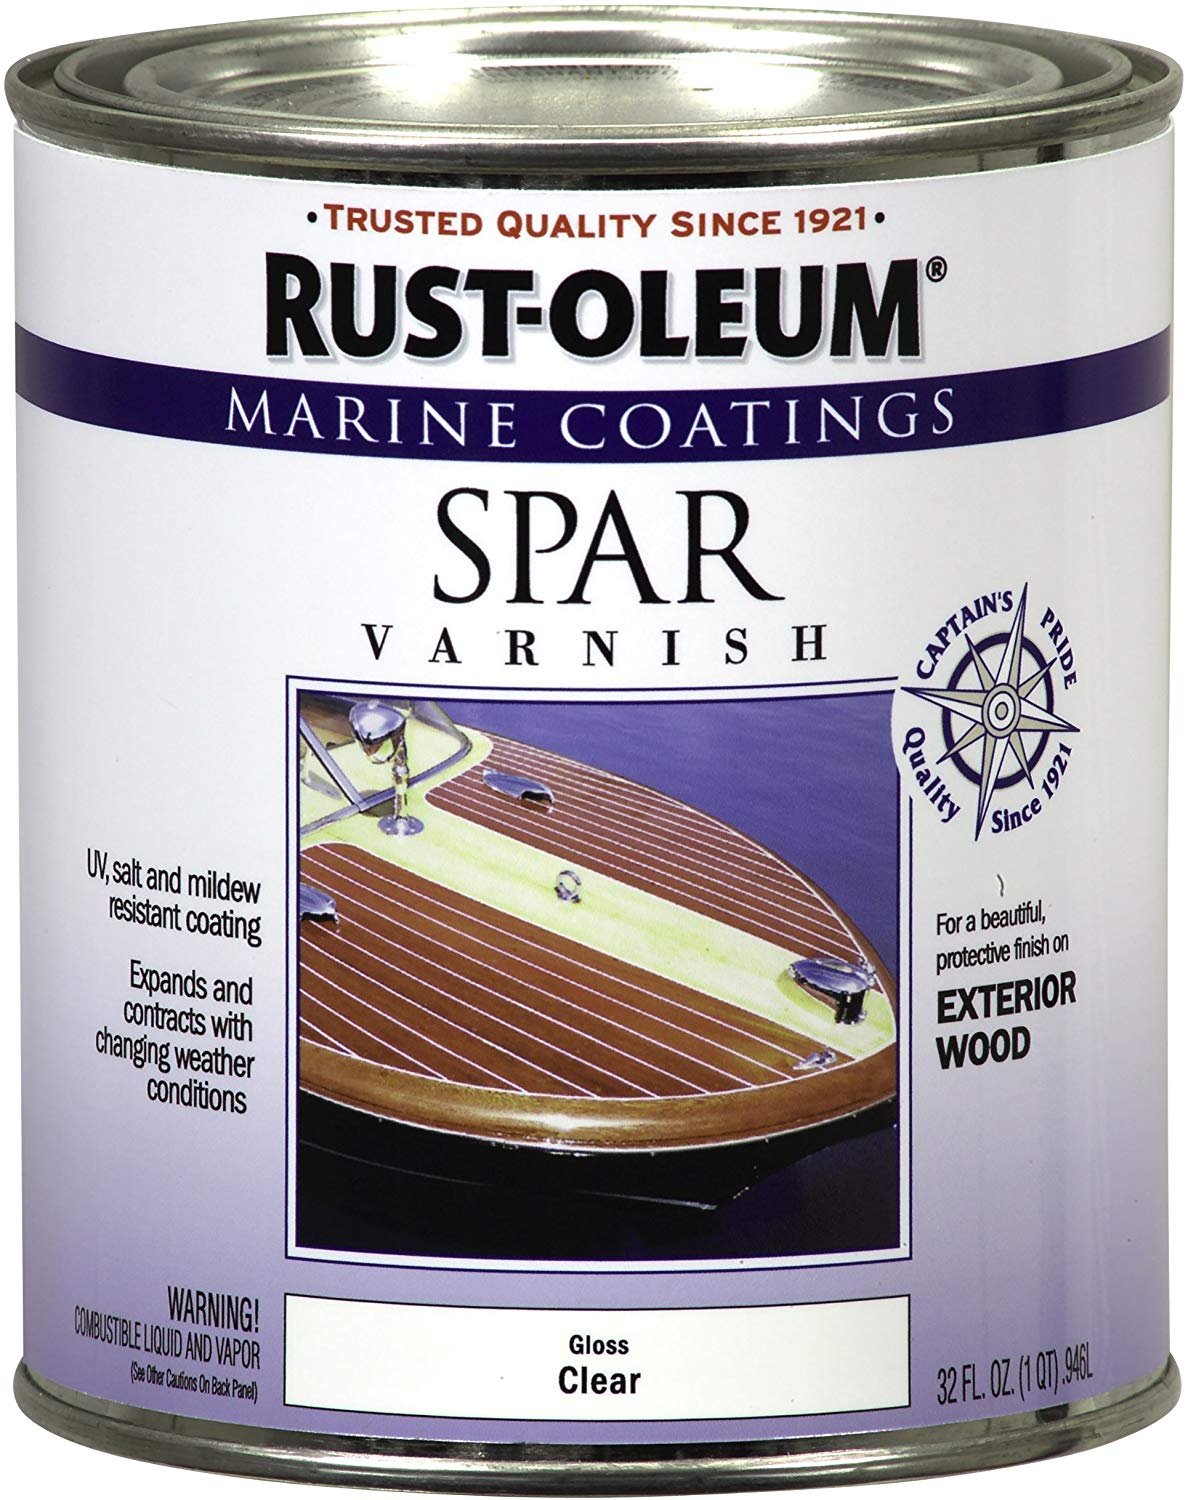 Rust-Oleum 207008 Marine Coatings Spar Varnish, 1 Qt, Gloss Clear - image 1 of 1